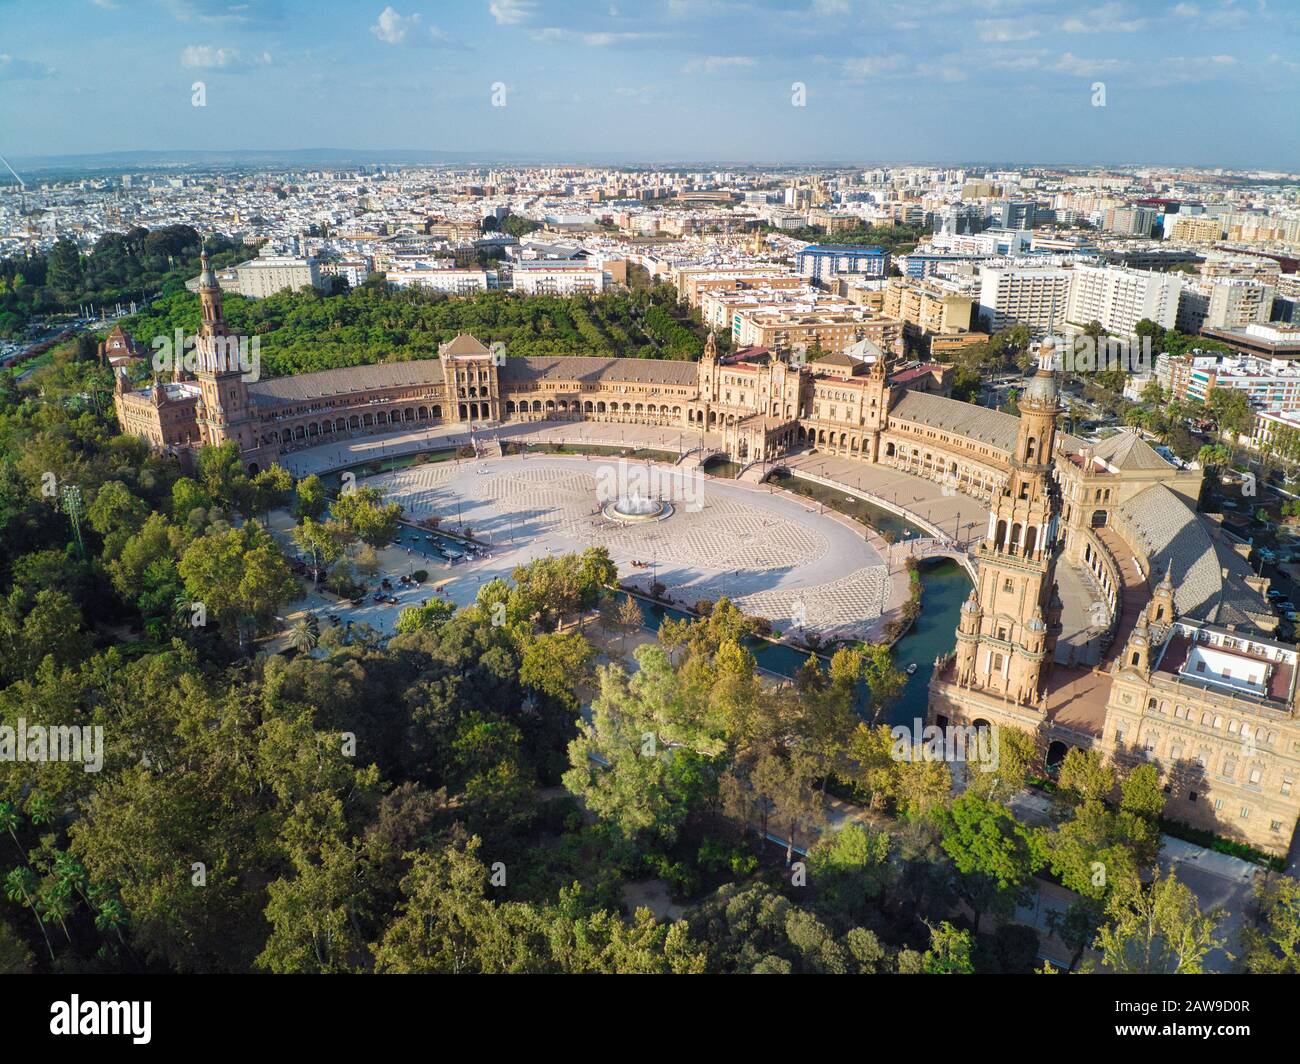 Aerial View Of Plaza De Espana In Seville Spain Stock Photo